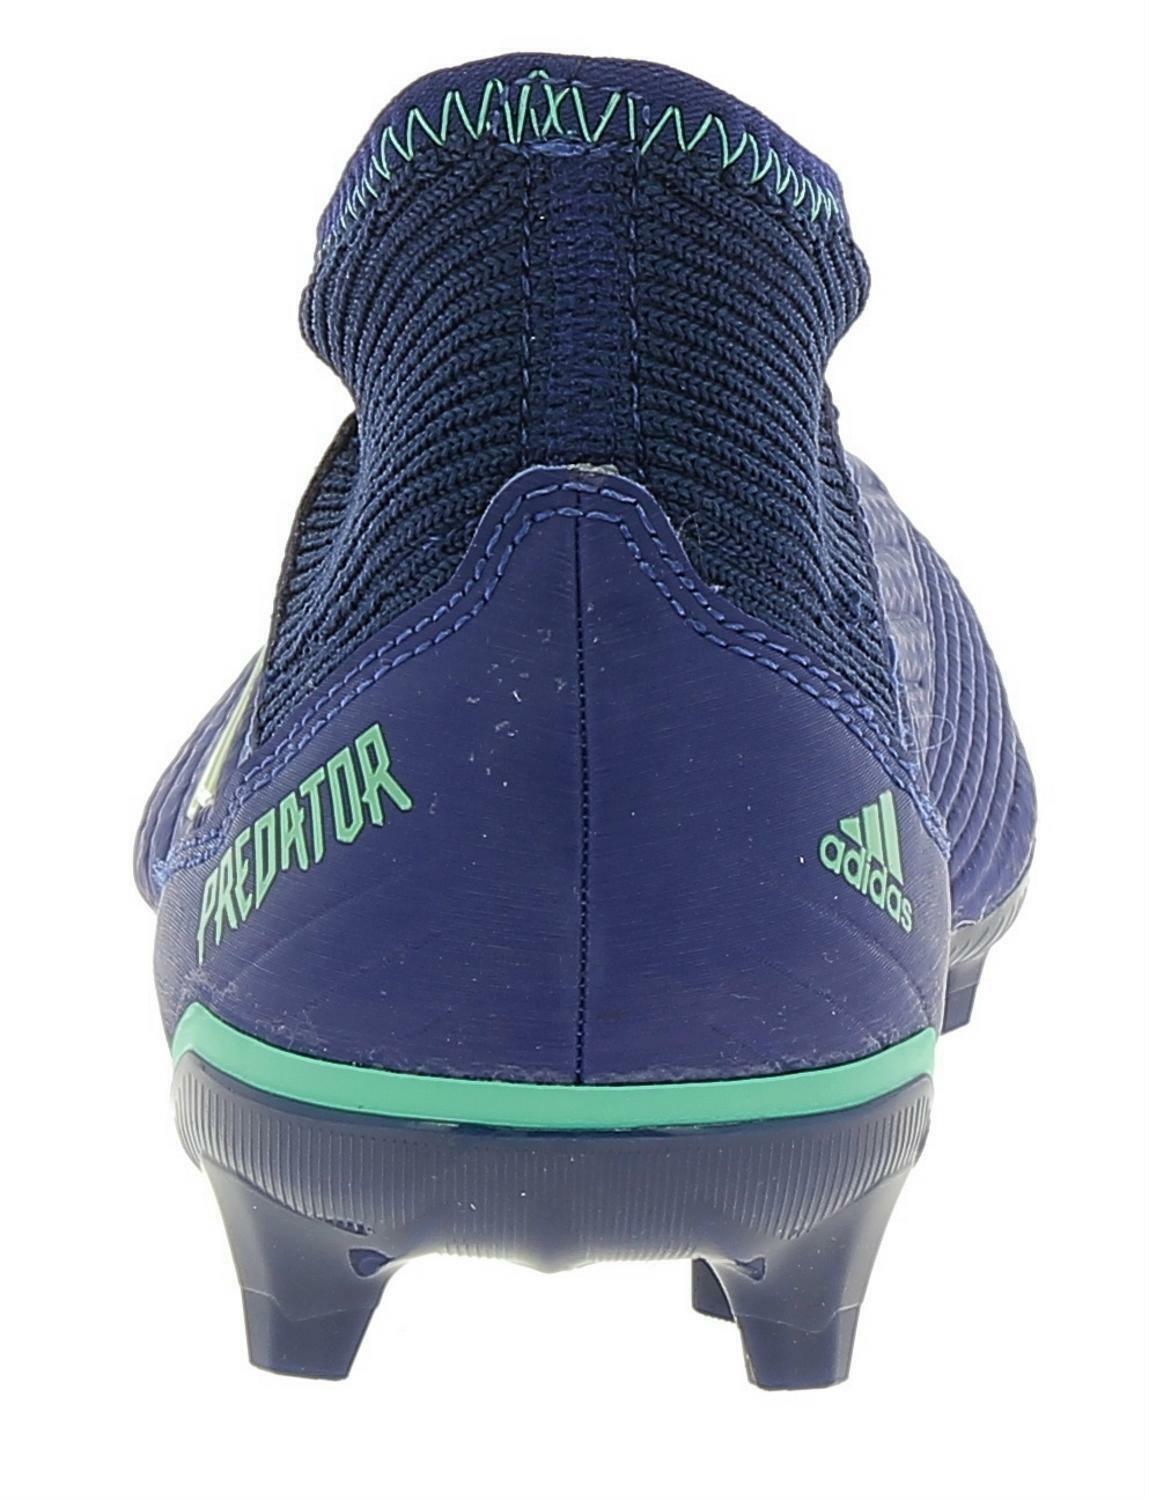 adidas adidas predator 18.3 fg scarpe calcio uomo blu cp9304